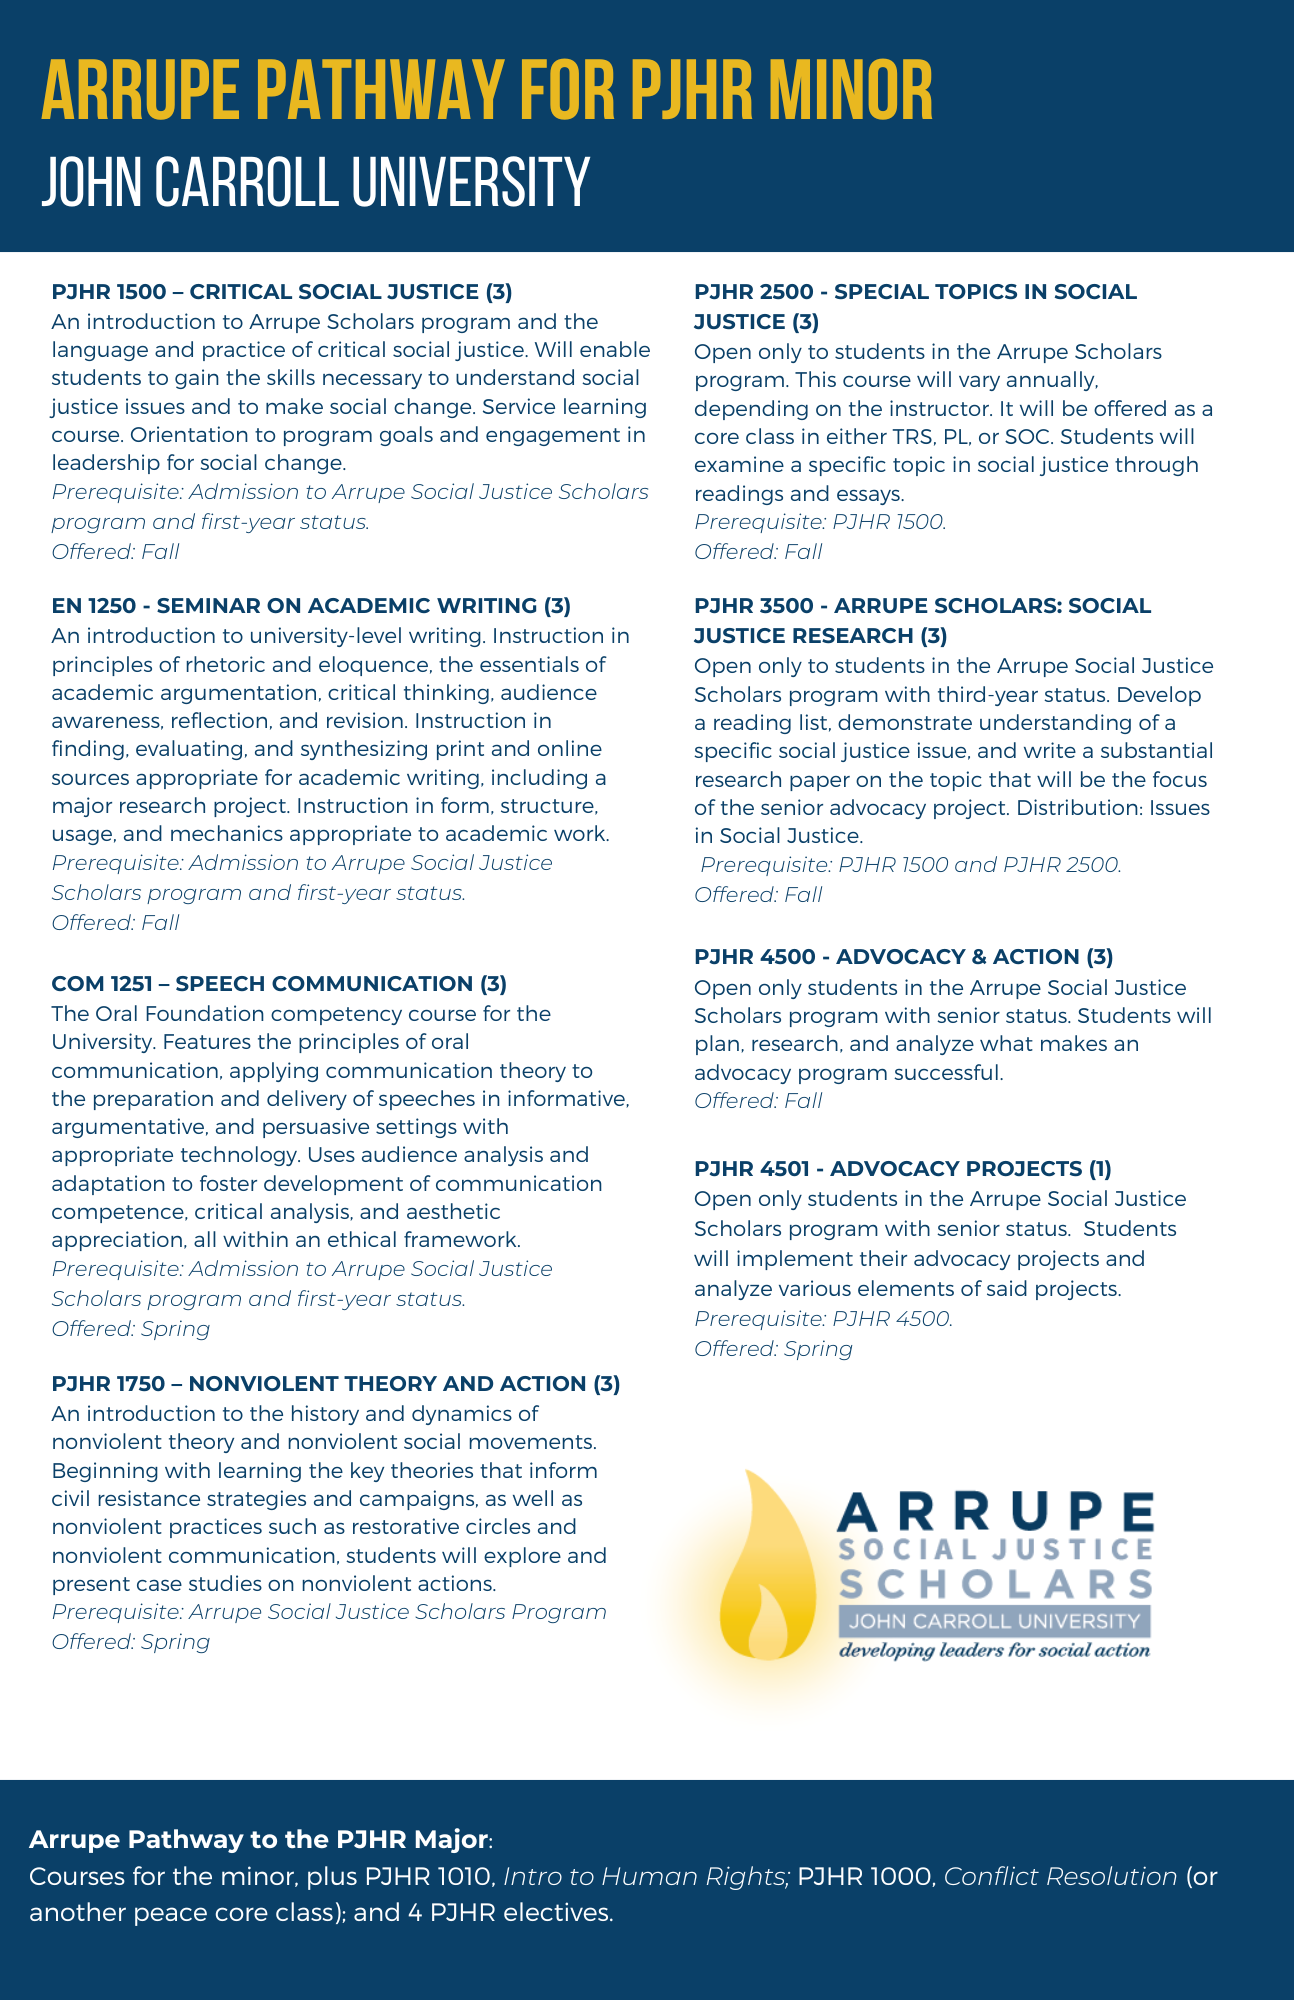 Arrupe Courses for PJHR Minor